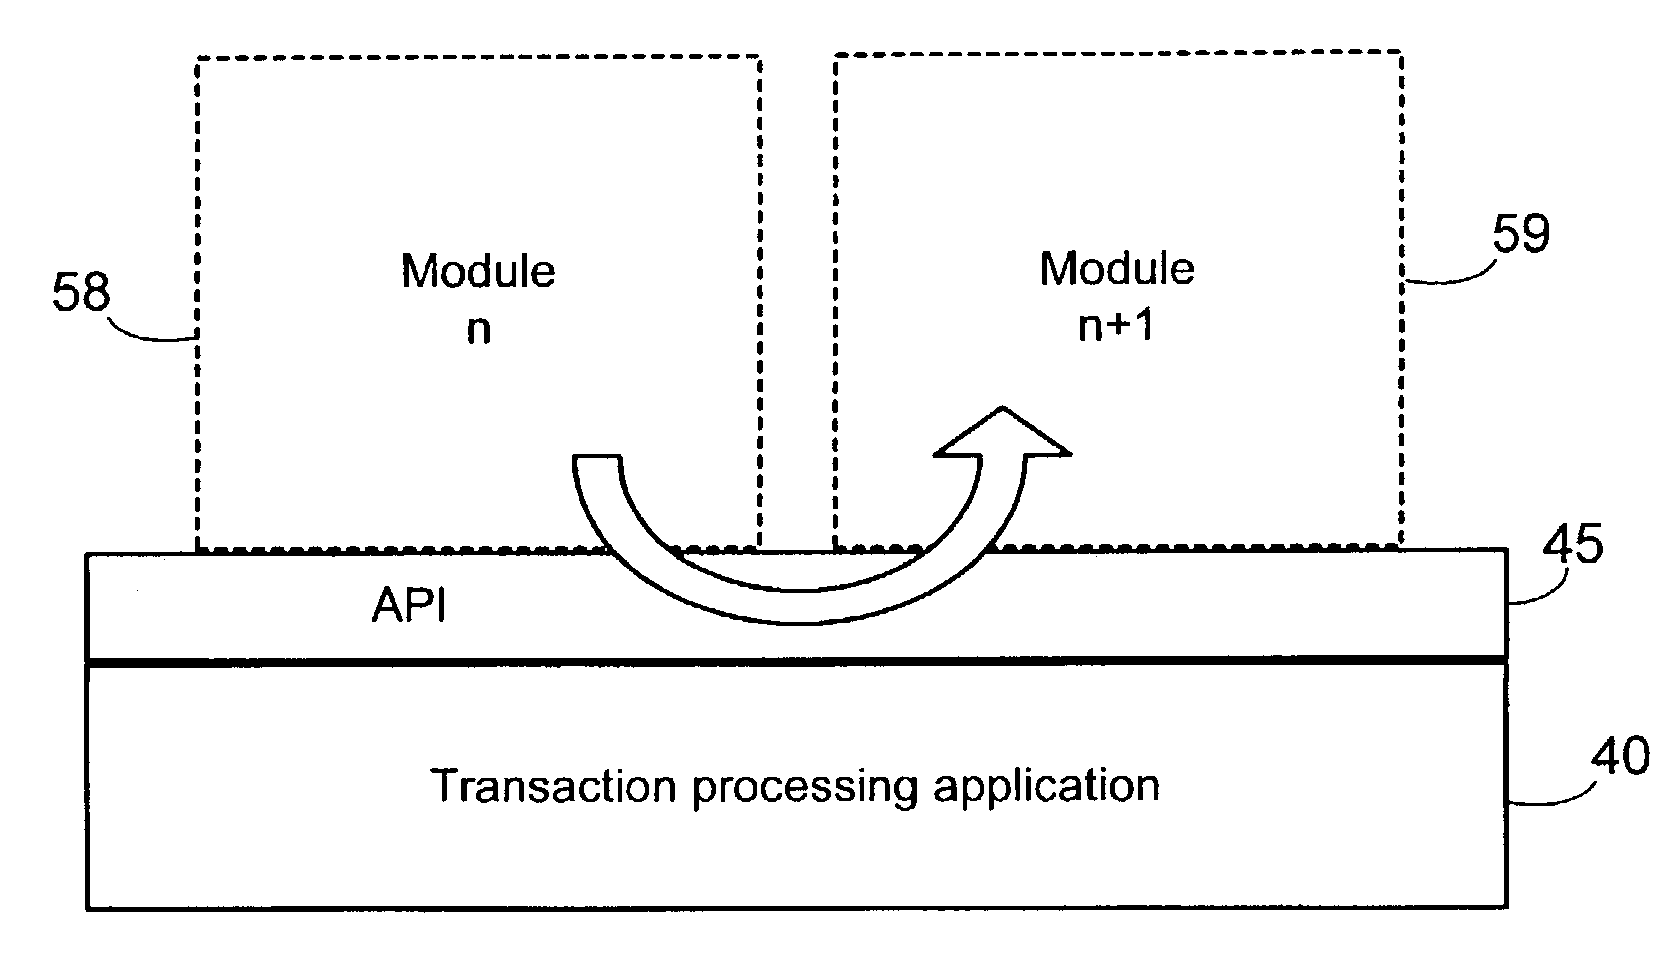 Plug-in API for modular network transaction processing